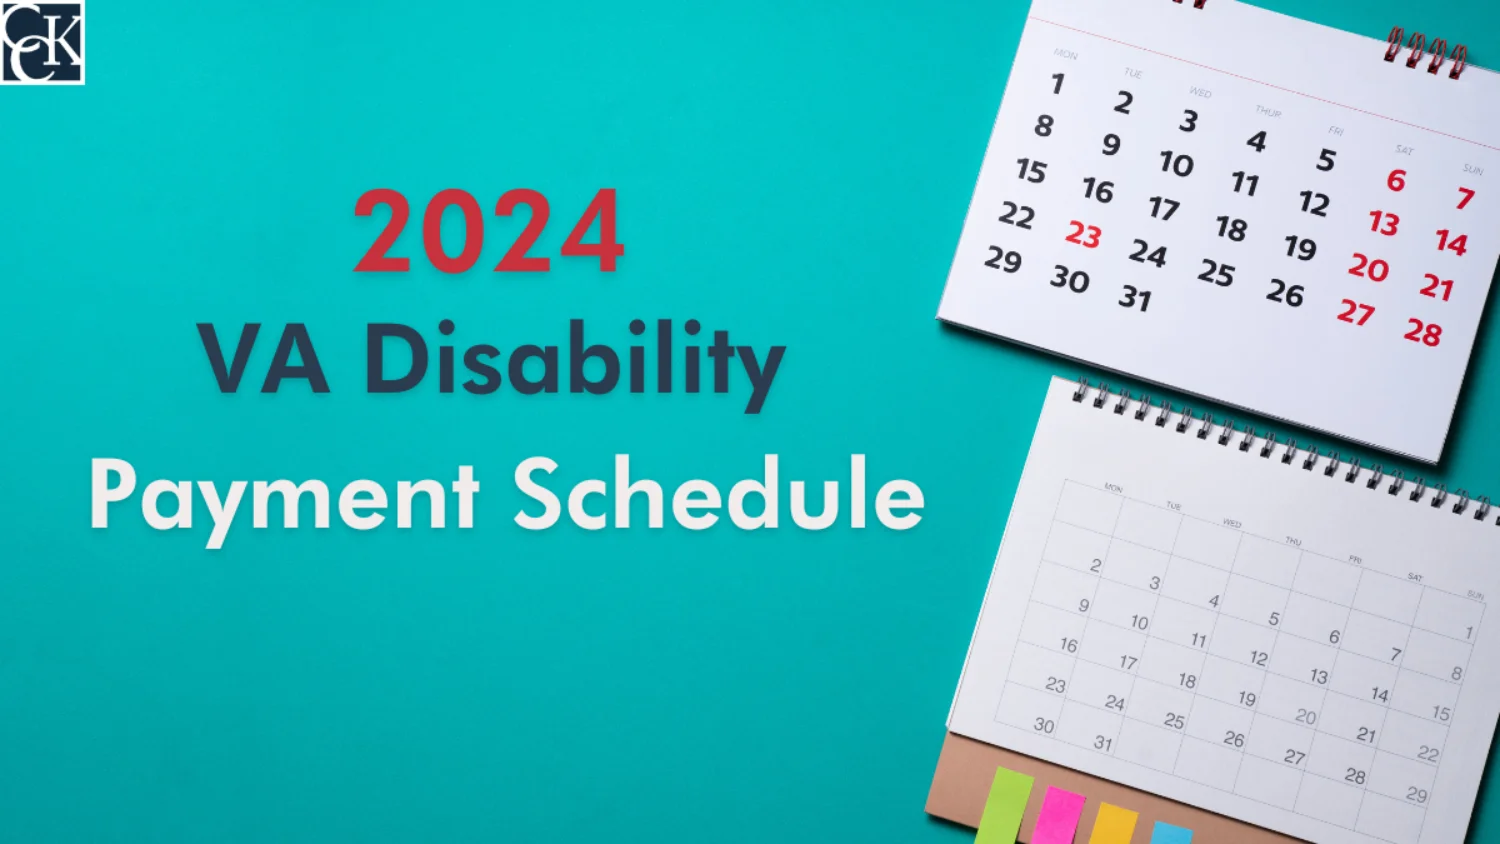 Va Disability Payment Schedule 2024 Ediva